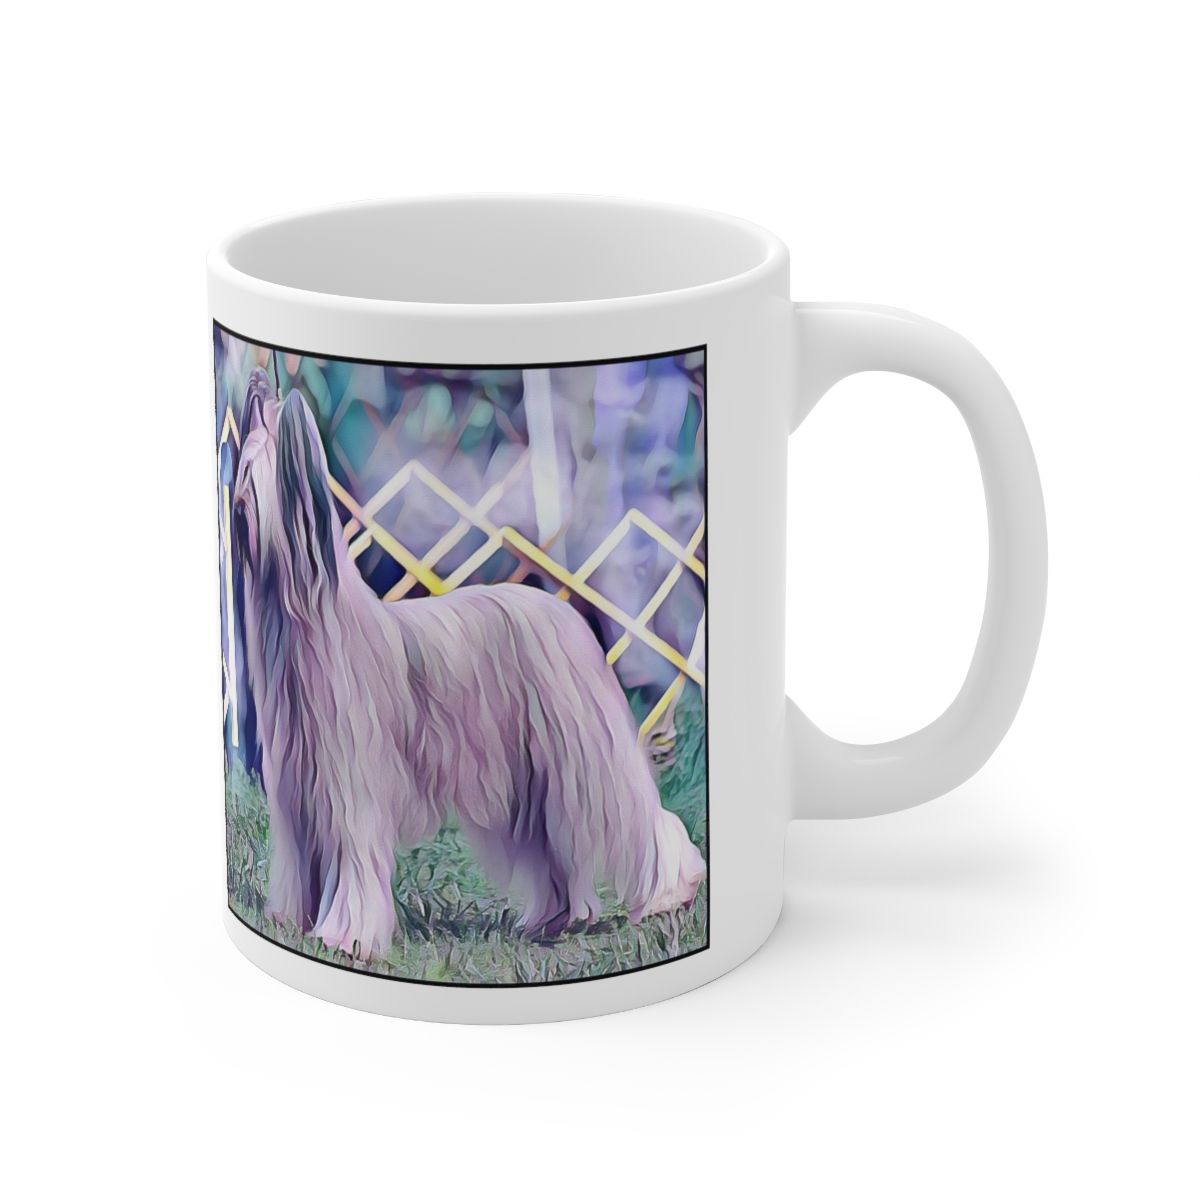 Picture of Briard-Lavender Ice Mug